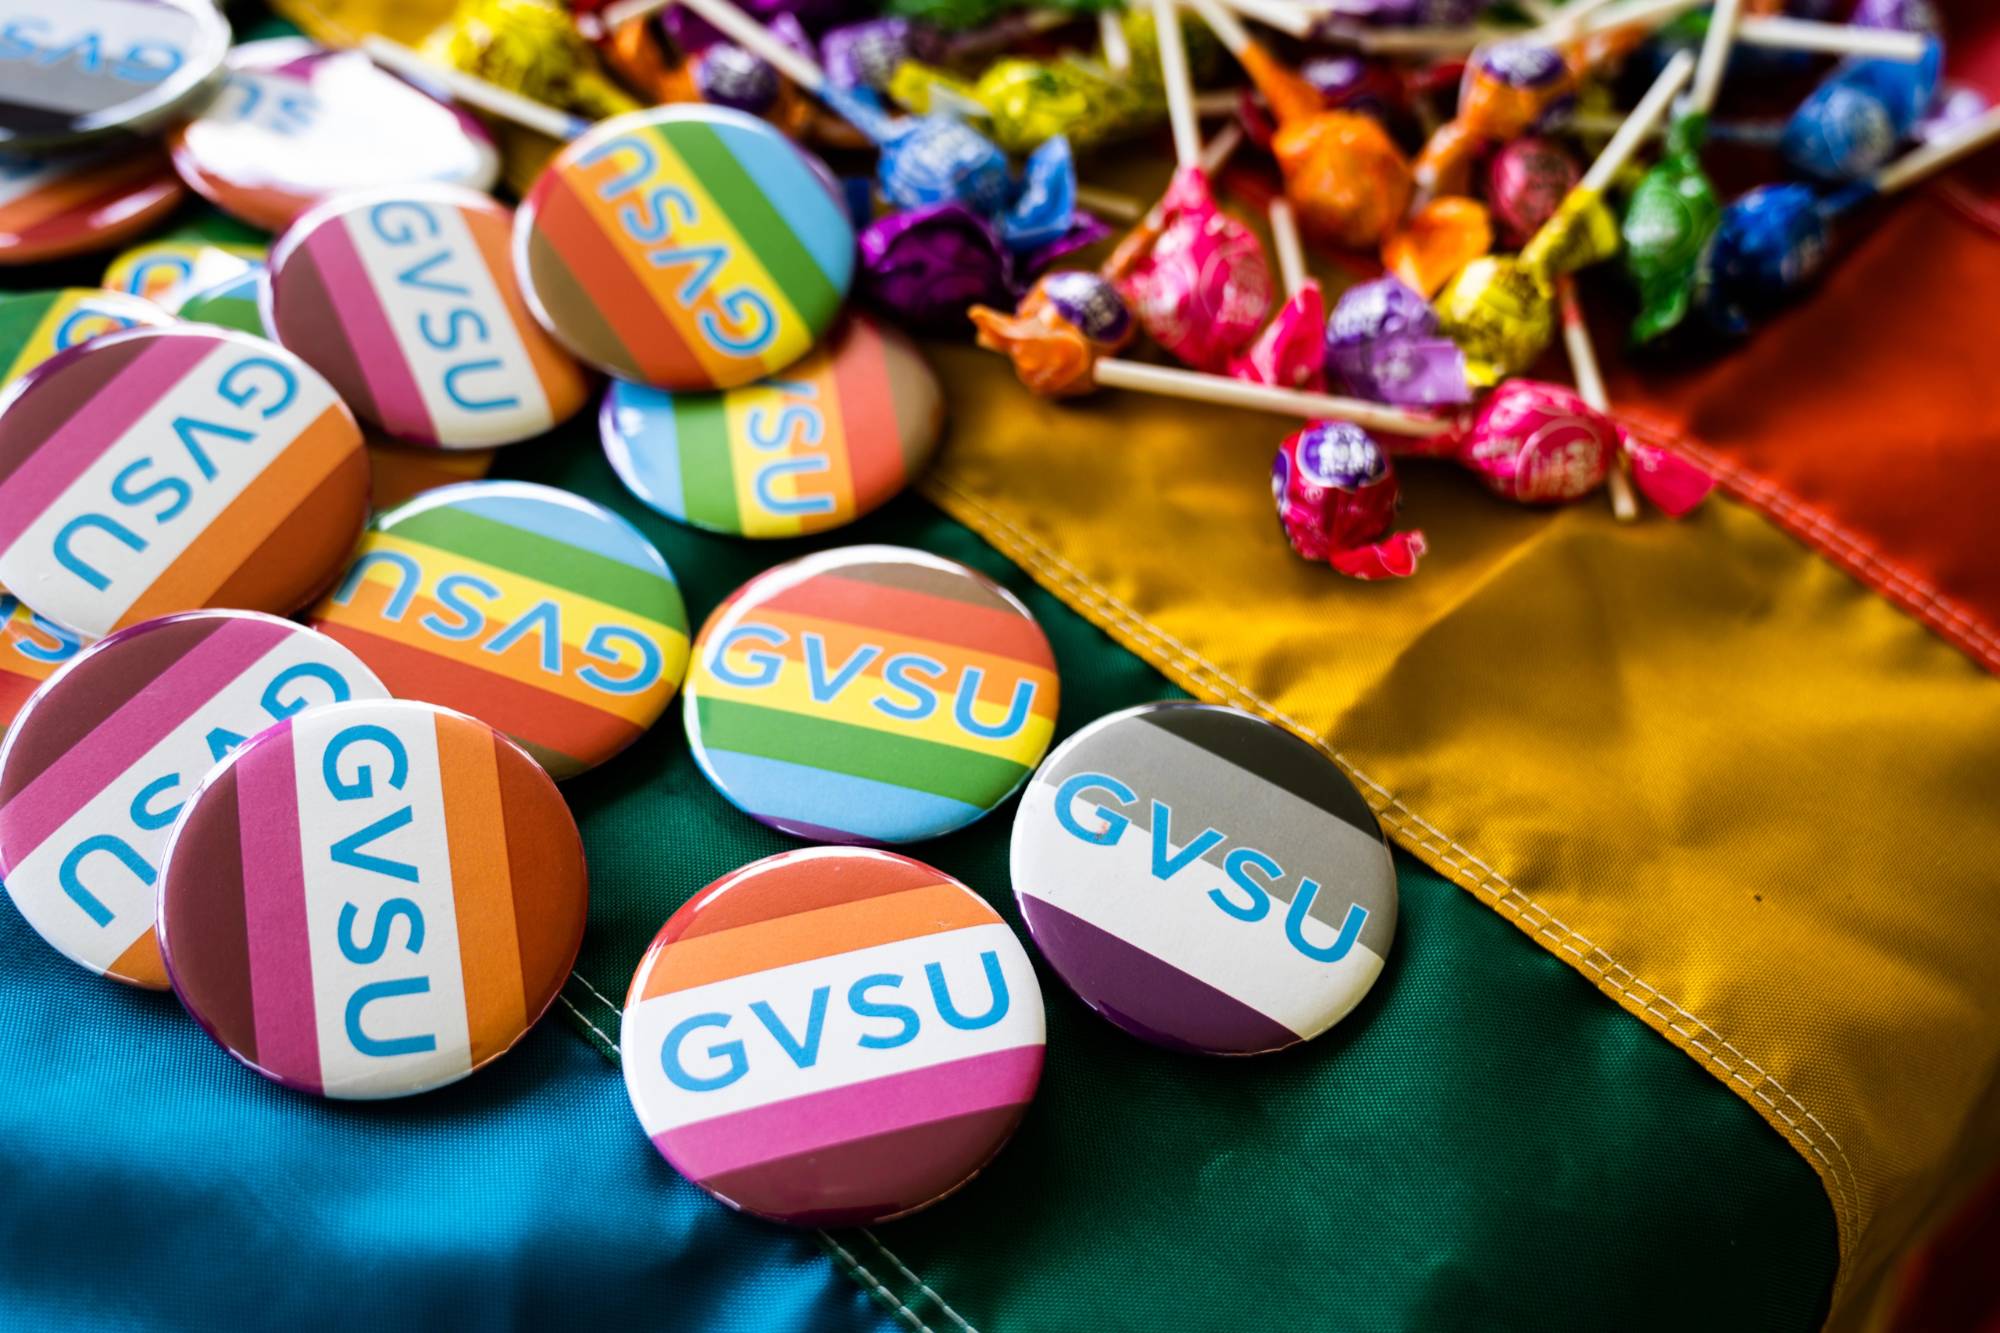 GVSU Pride pins